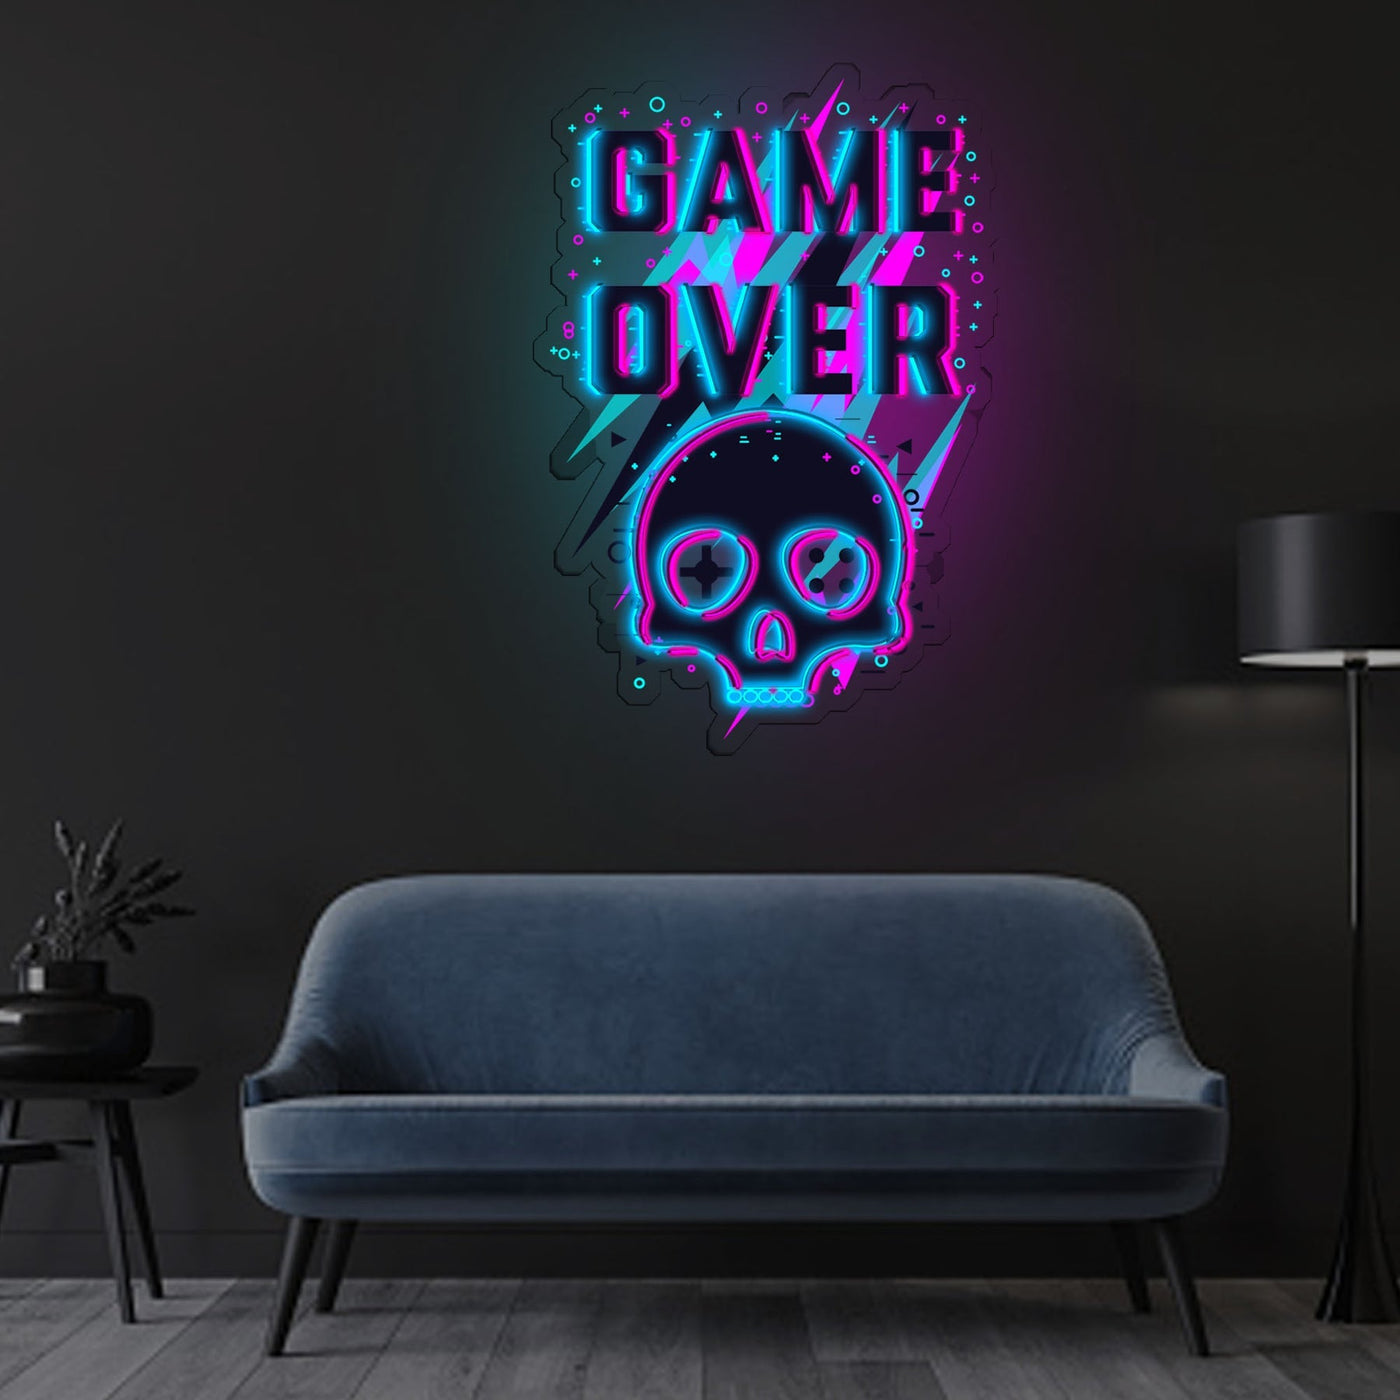 Game Over B&P Neon Sign x Acrylic Artwork - 2ftLED Neon x Acrylic Print